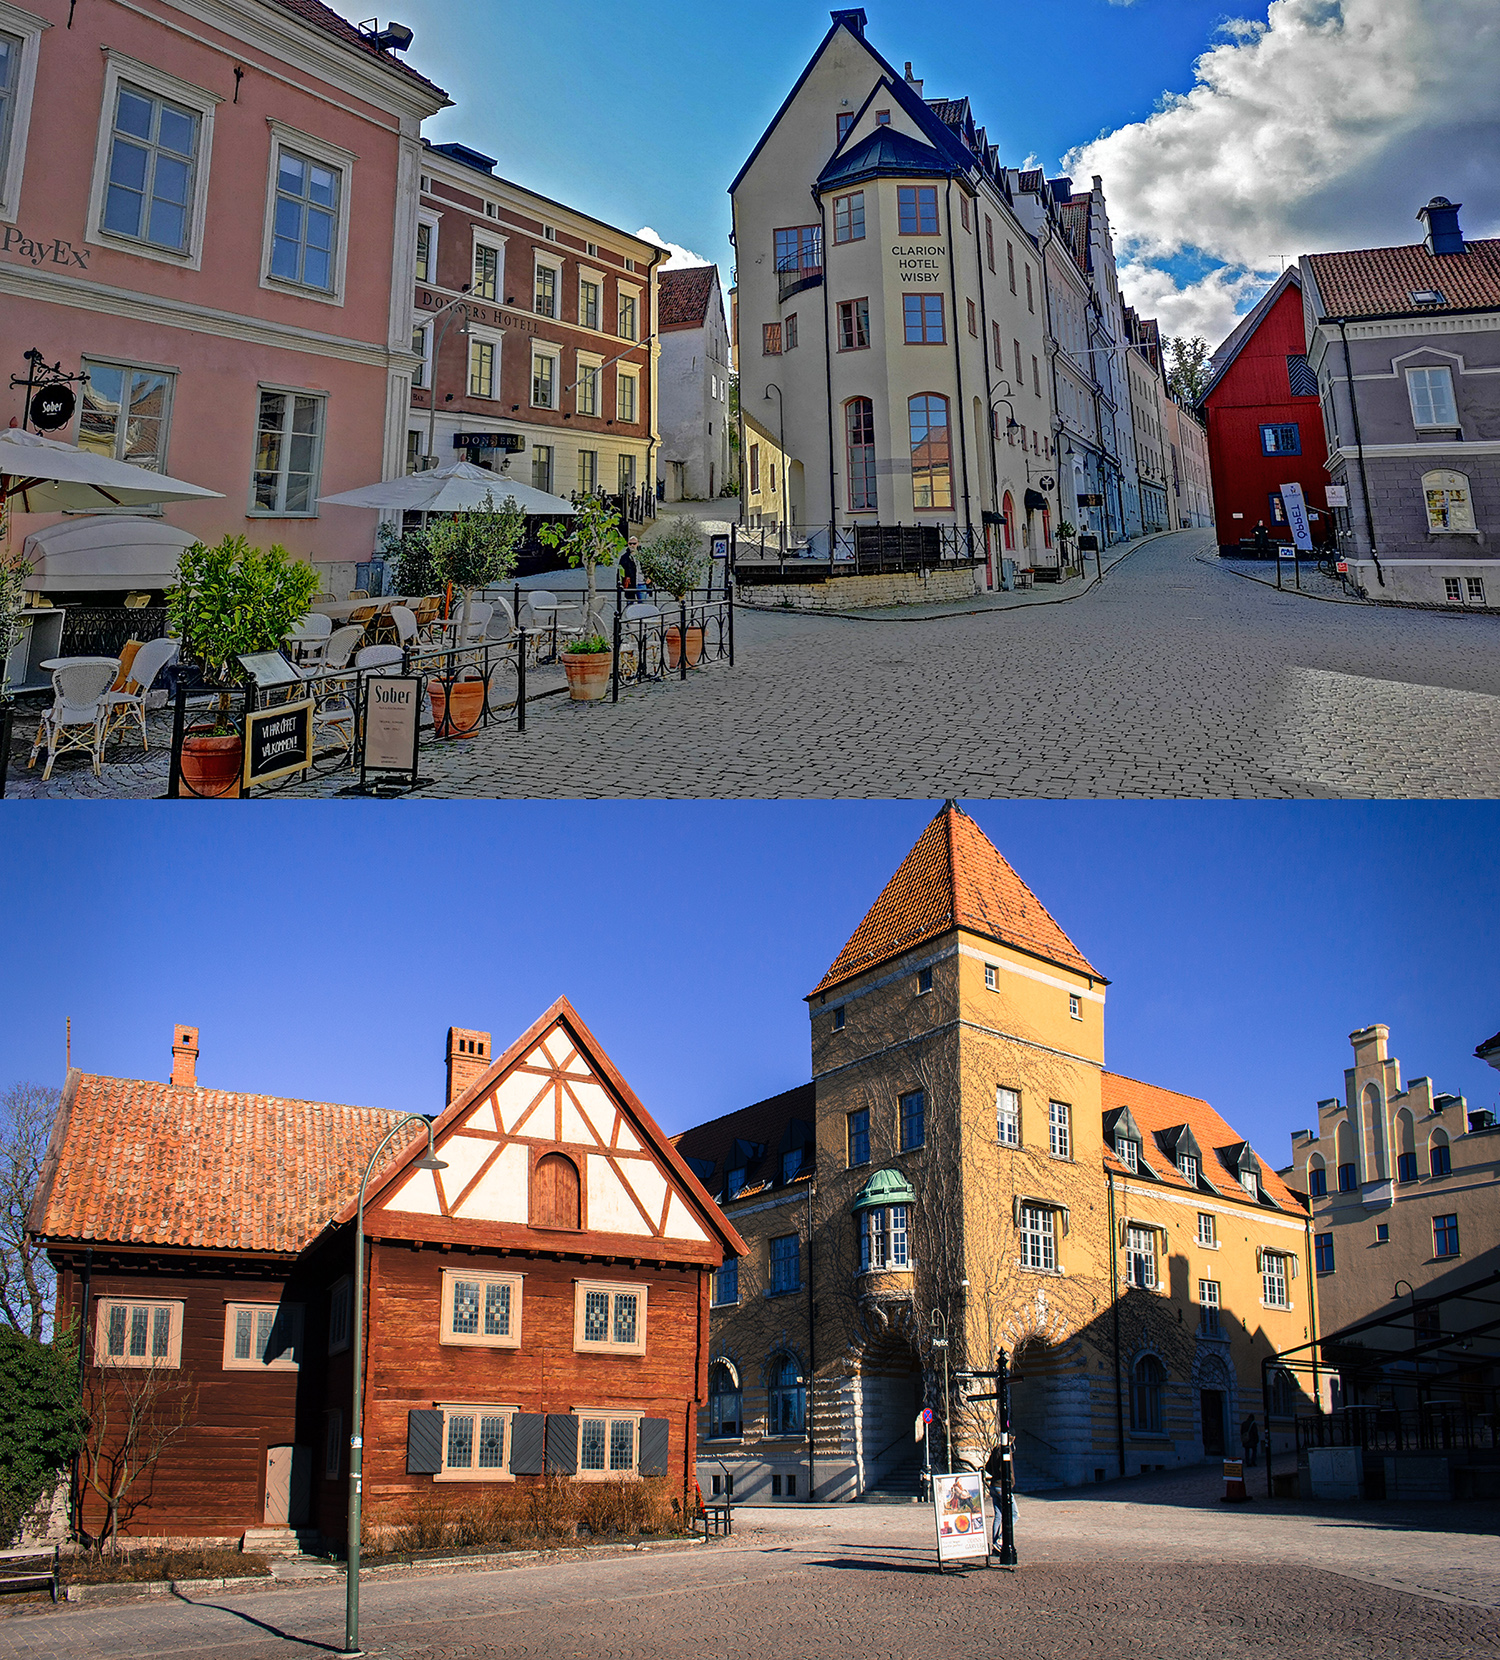 Är Donners plats i Visby Sveriges vackraste torg?